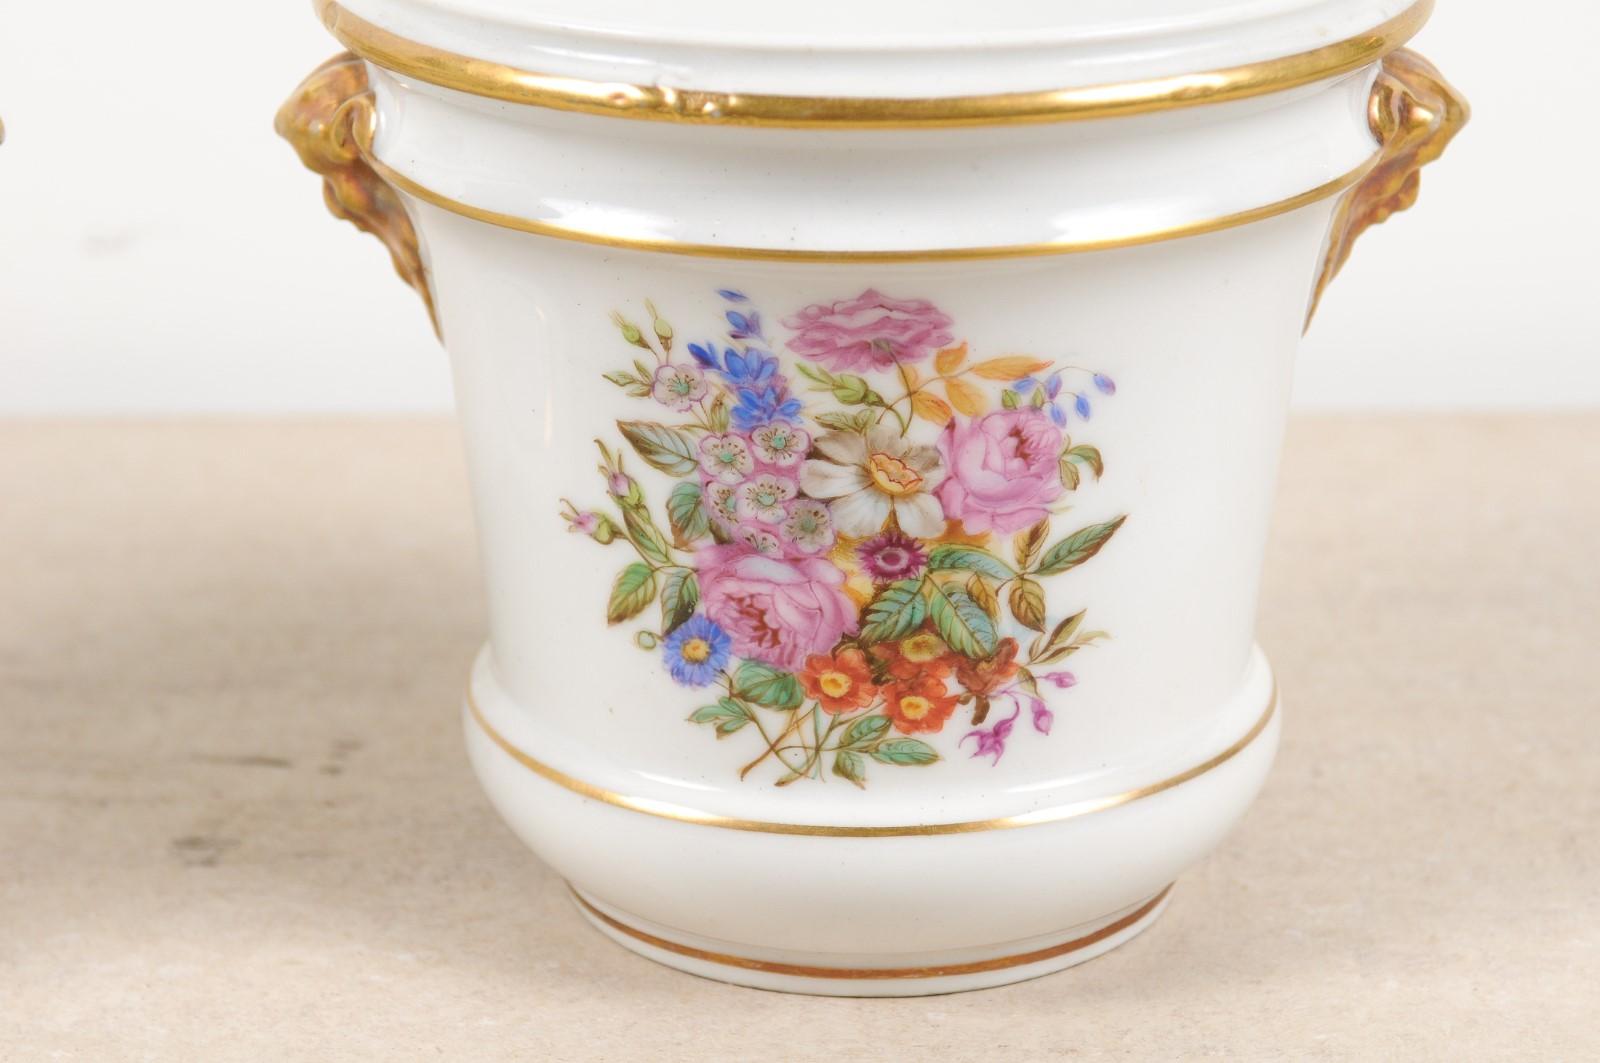 Pair of French Late 18th Century Paris Porcelain Cachepots with Floral Décor For Sale 2